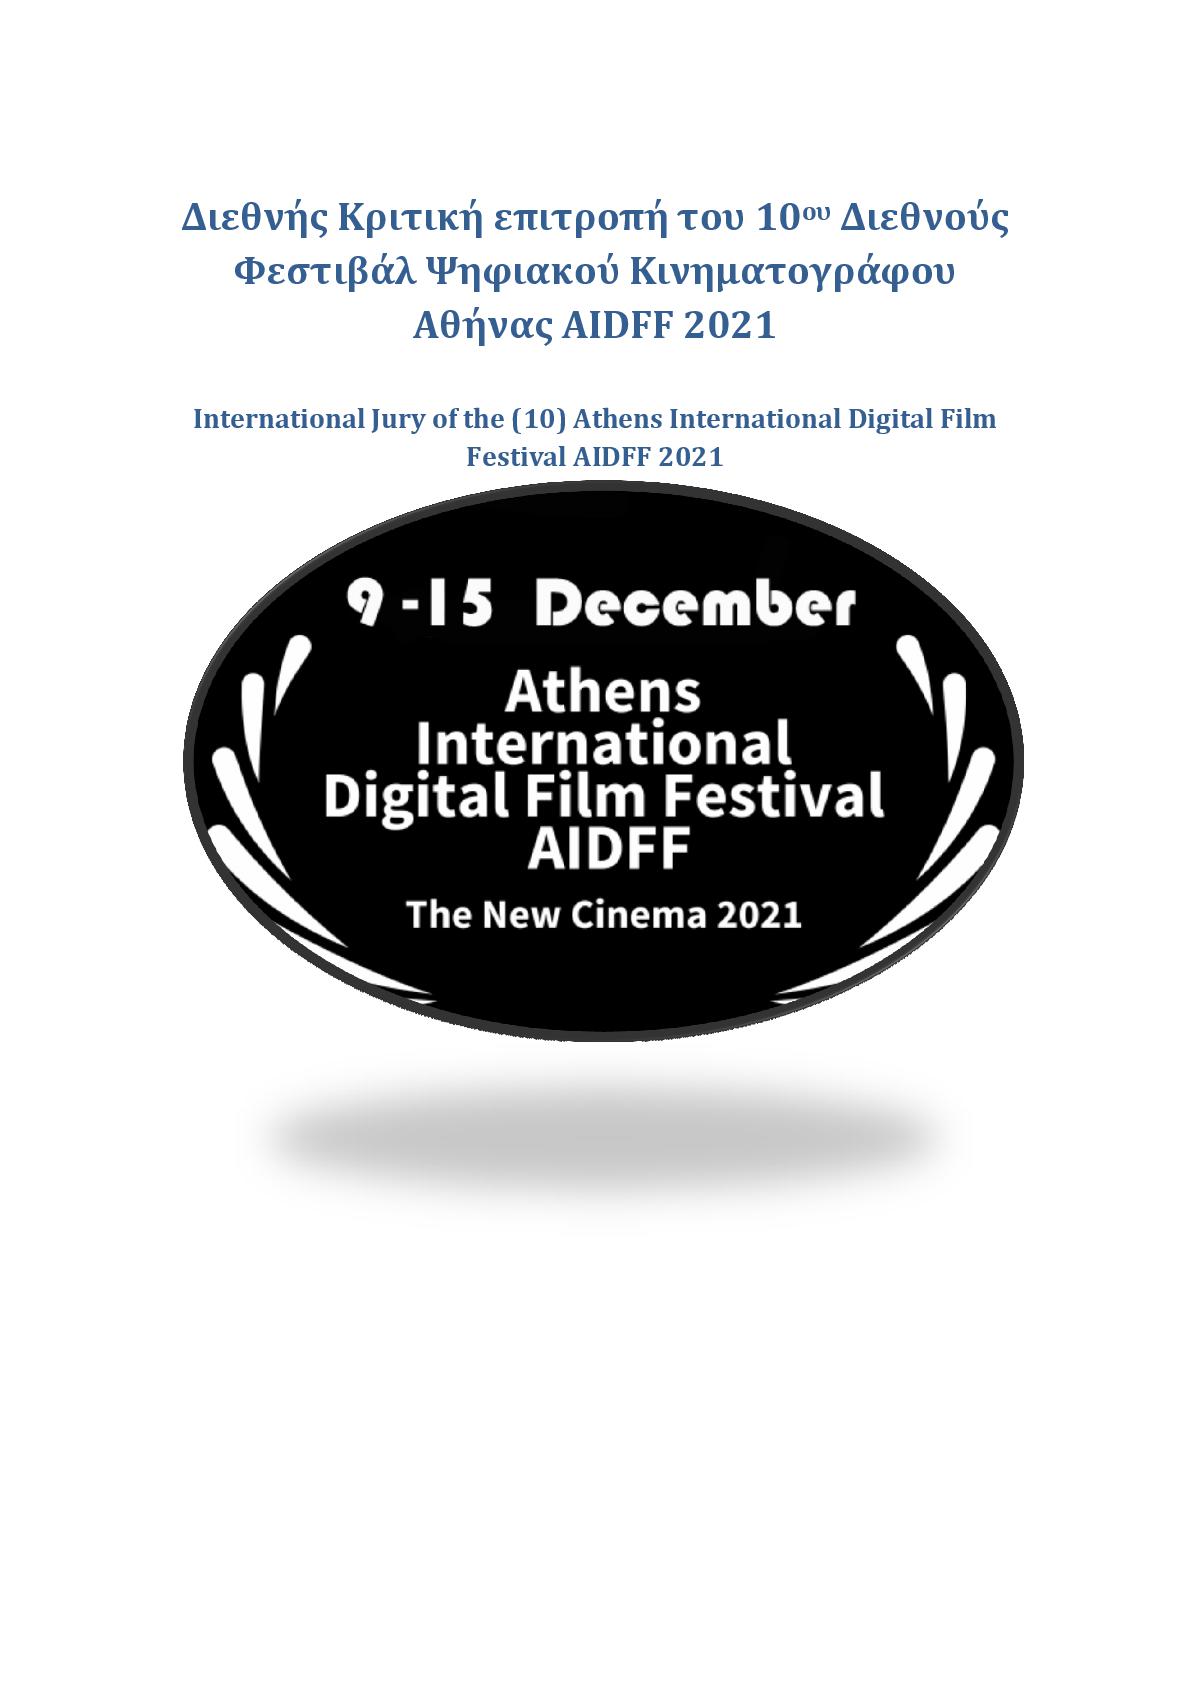 International Jury of the 10th Athens International Digital Film Festival AIDFF 2021 001